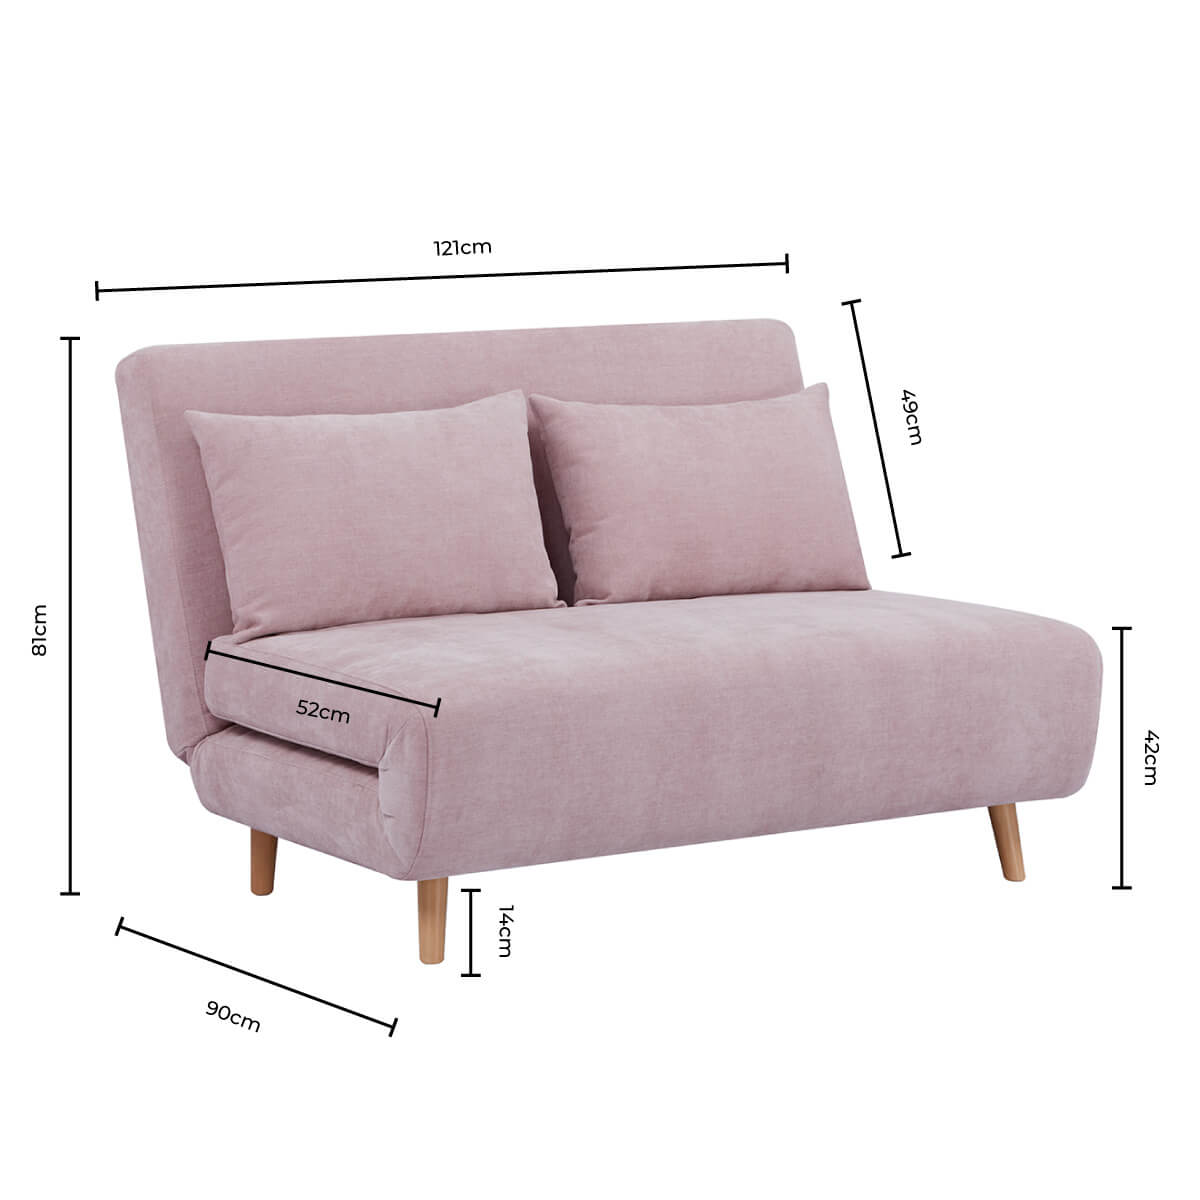 Seattle Double Click Clack Sofa Bed - Pale Pink - DUSK